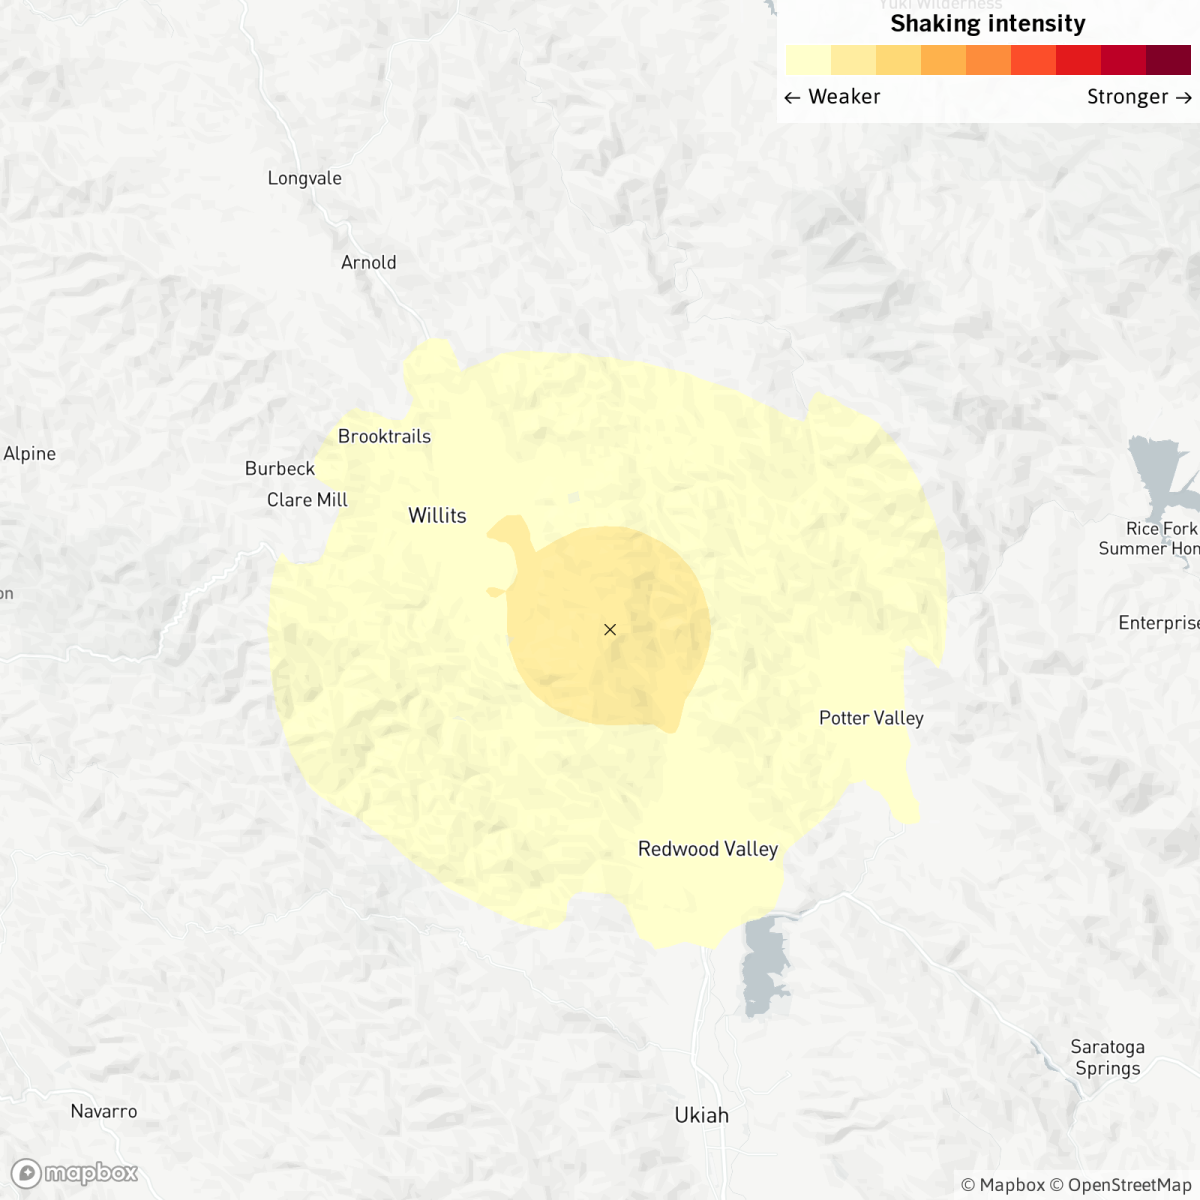 Shake map of the earthquake near Ukiah, Calif.